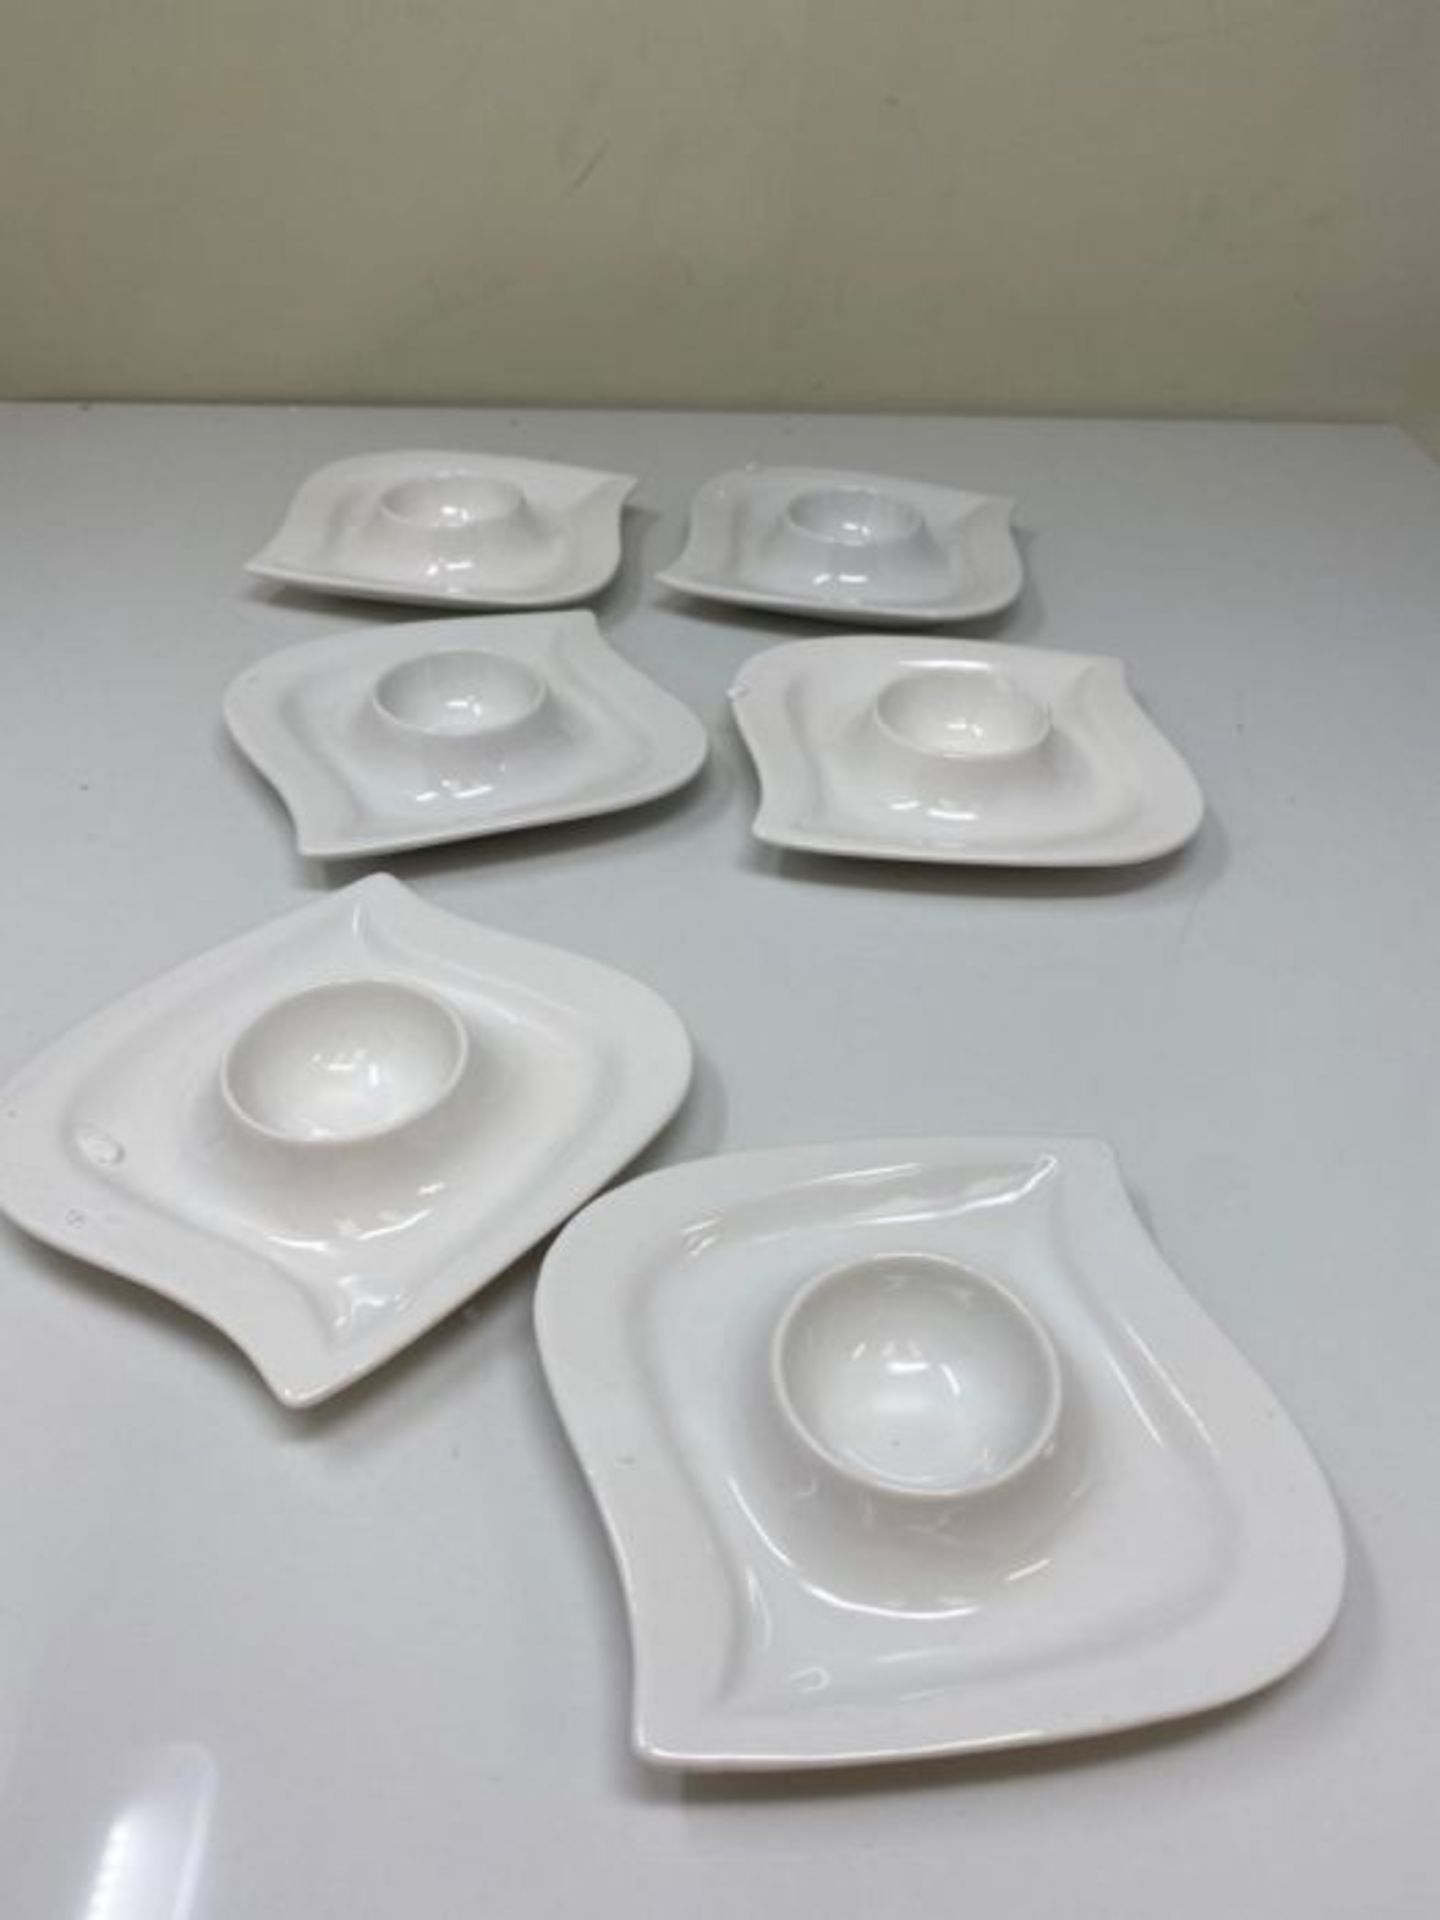 Schramm® 6 Egg Cups Curved Porcelain White Egg Holder with Shelf Egg Stand 6 Pack - Image 3 of 3